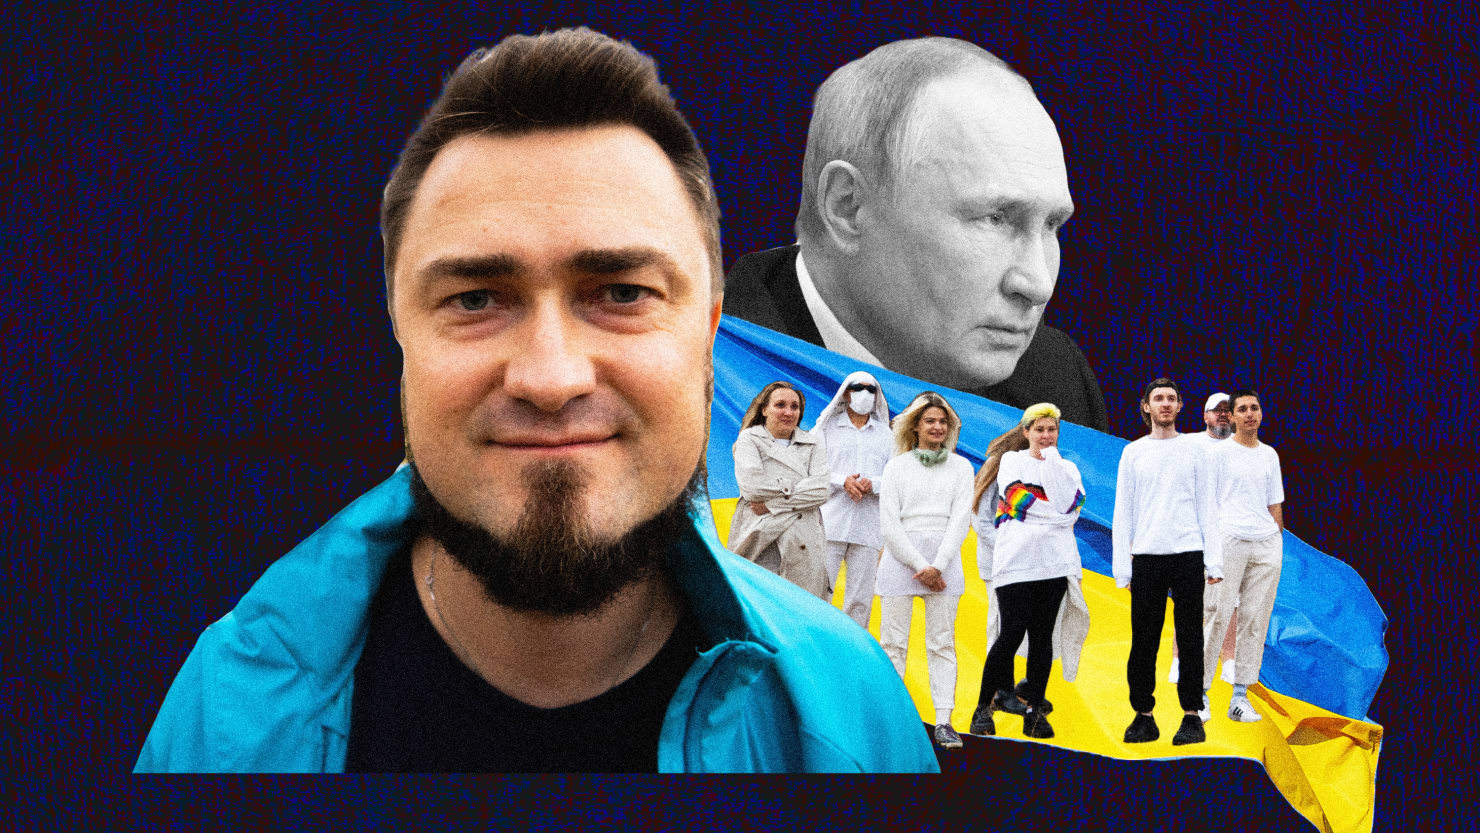 Rusos fugitivos prometen luchar contra el “parásito” Putin